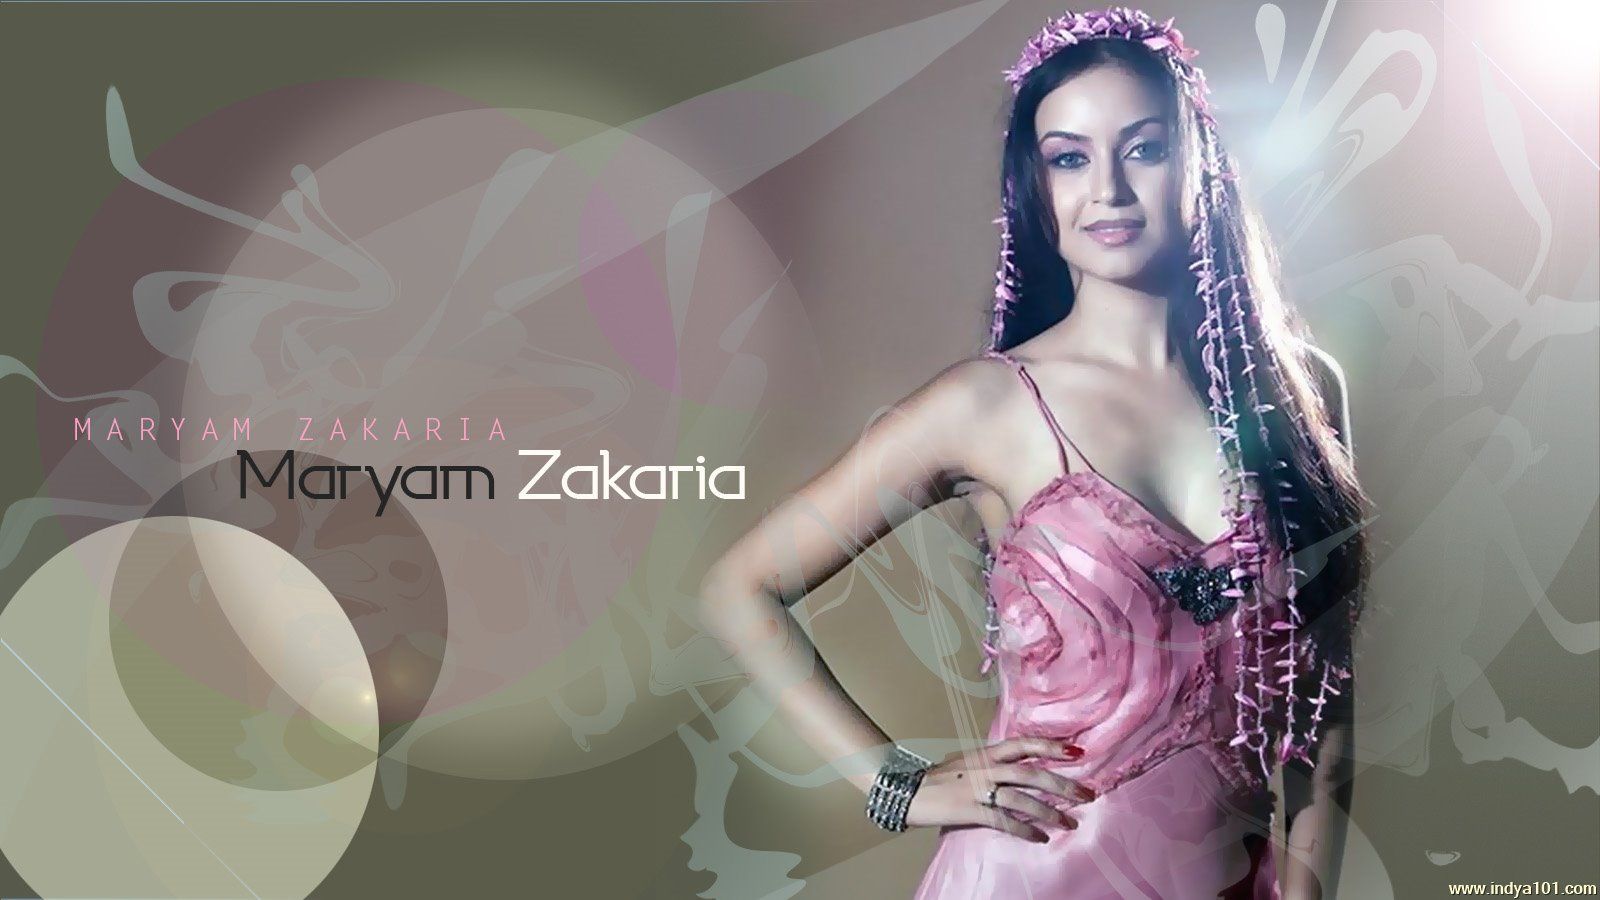 Maryam Zakaria wallpaper - (1600x900), Indya101.com